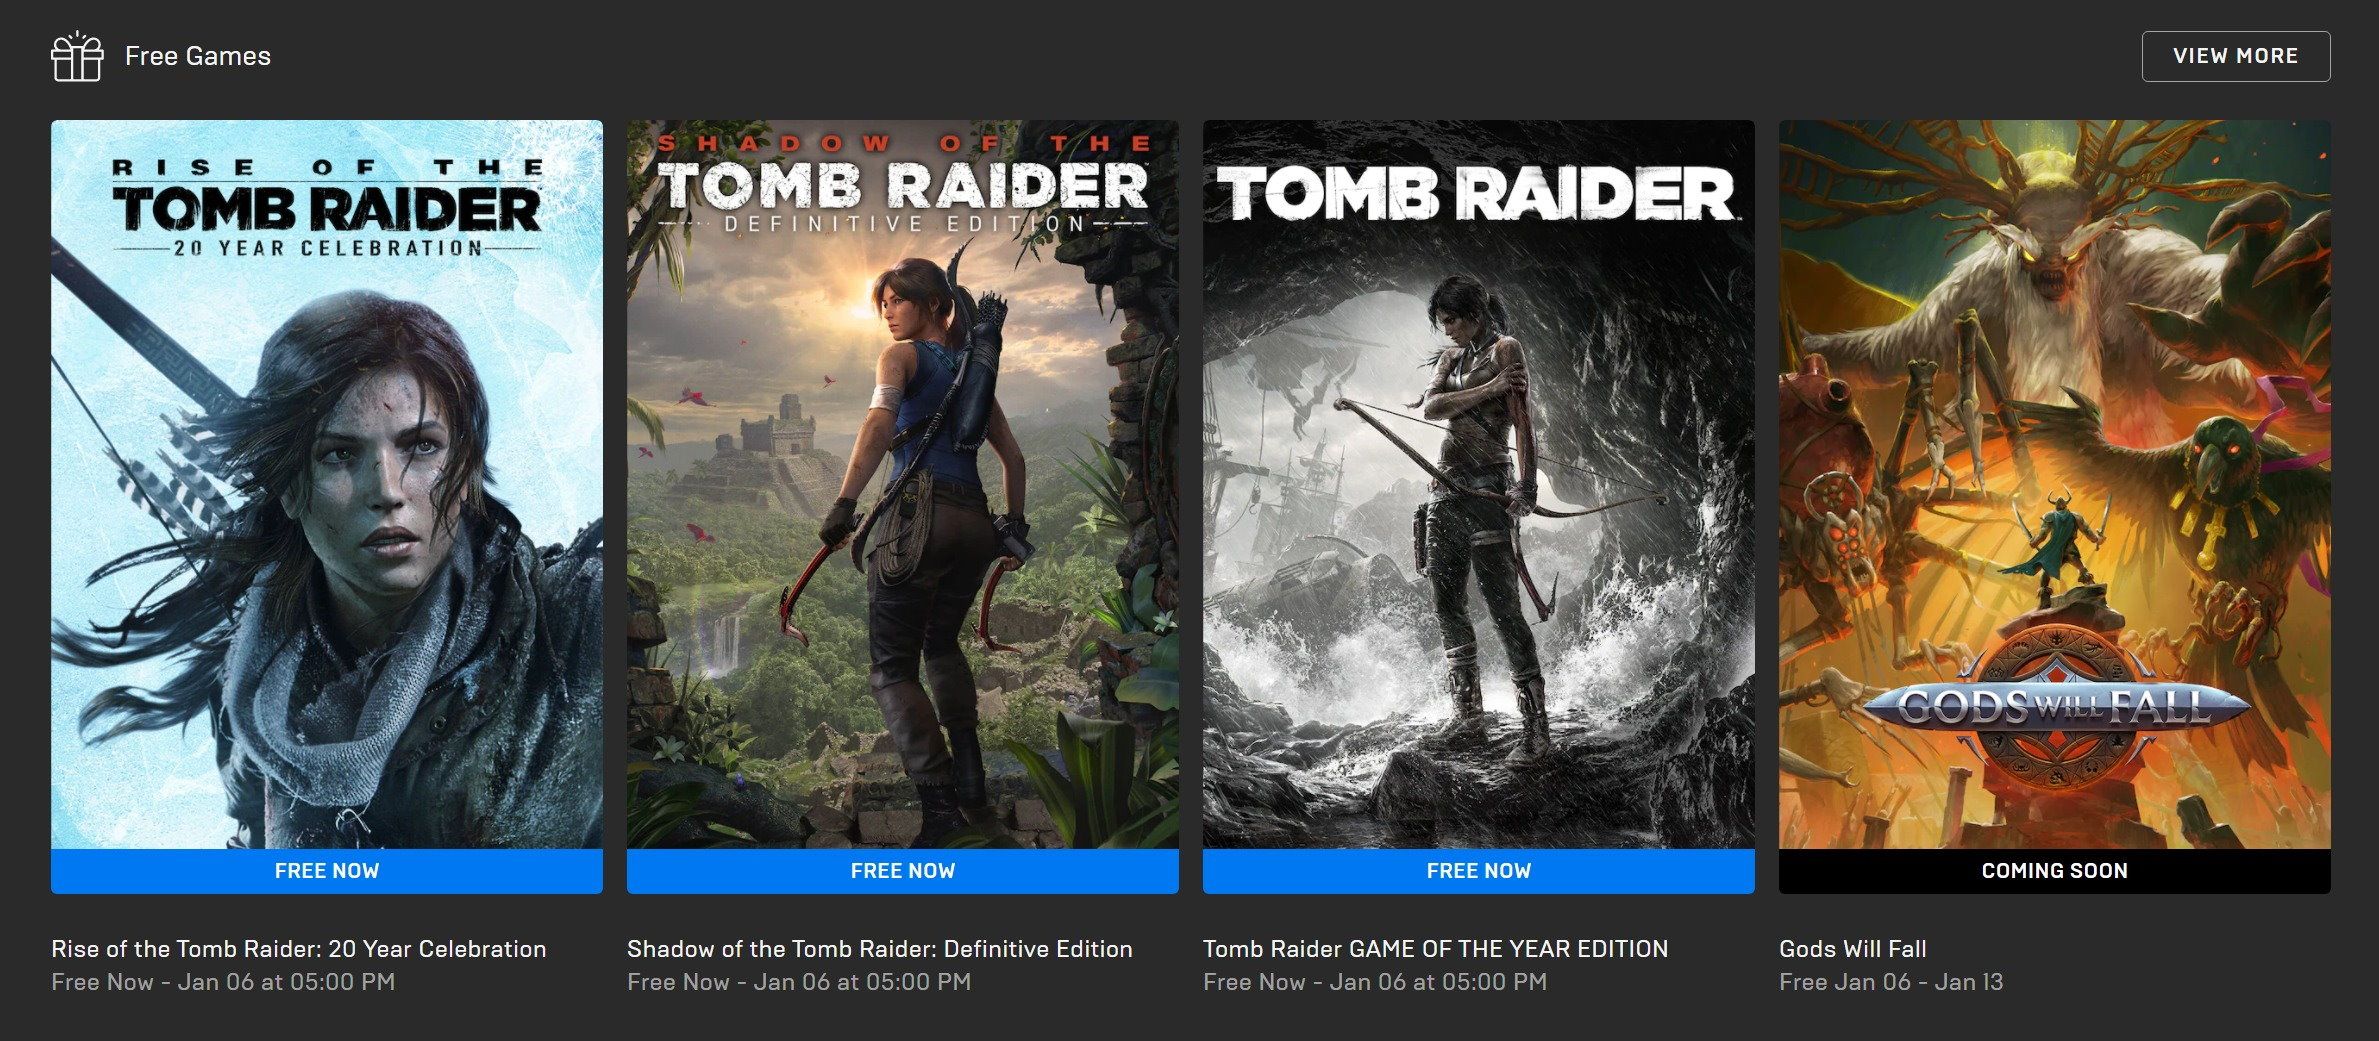 Tomb Raider Free - via Epic Games Store